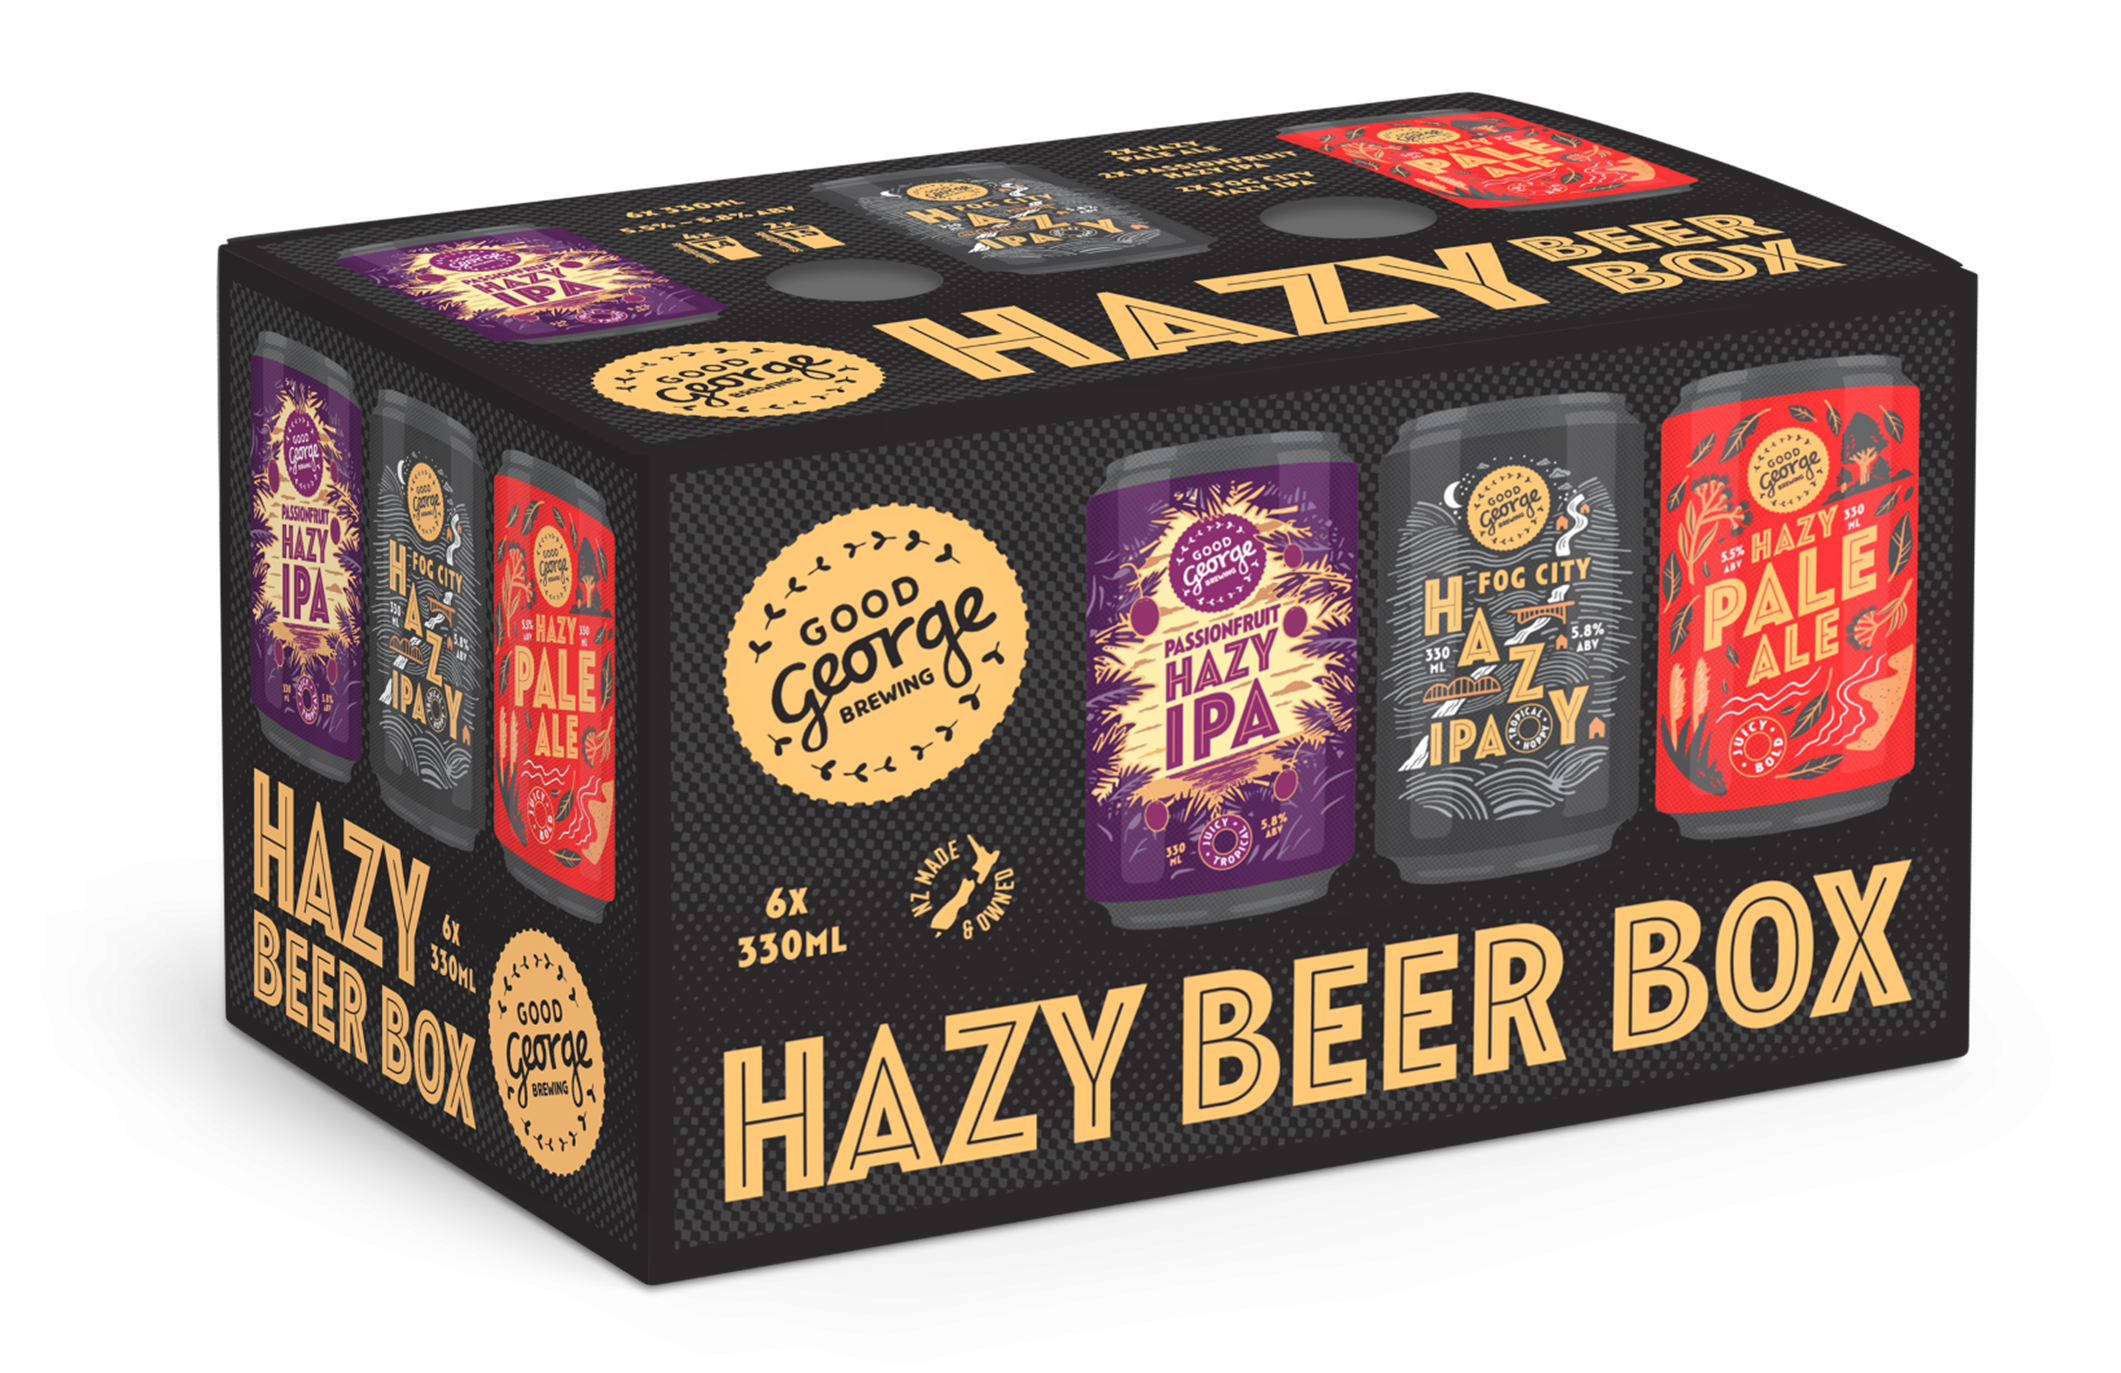 Good George Hazy Beer Box